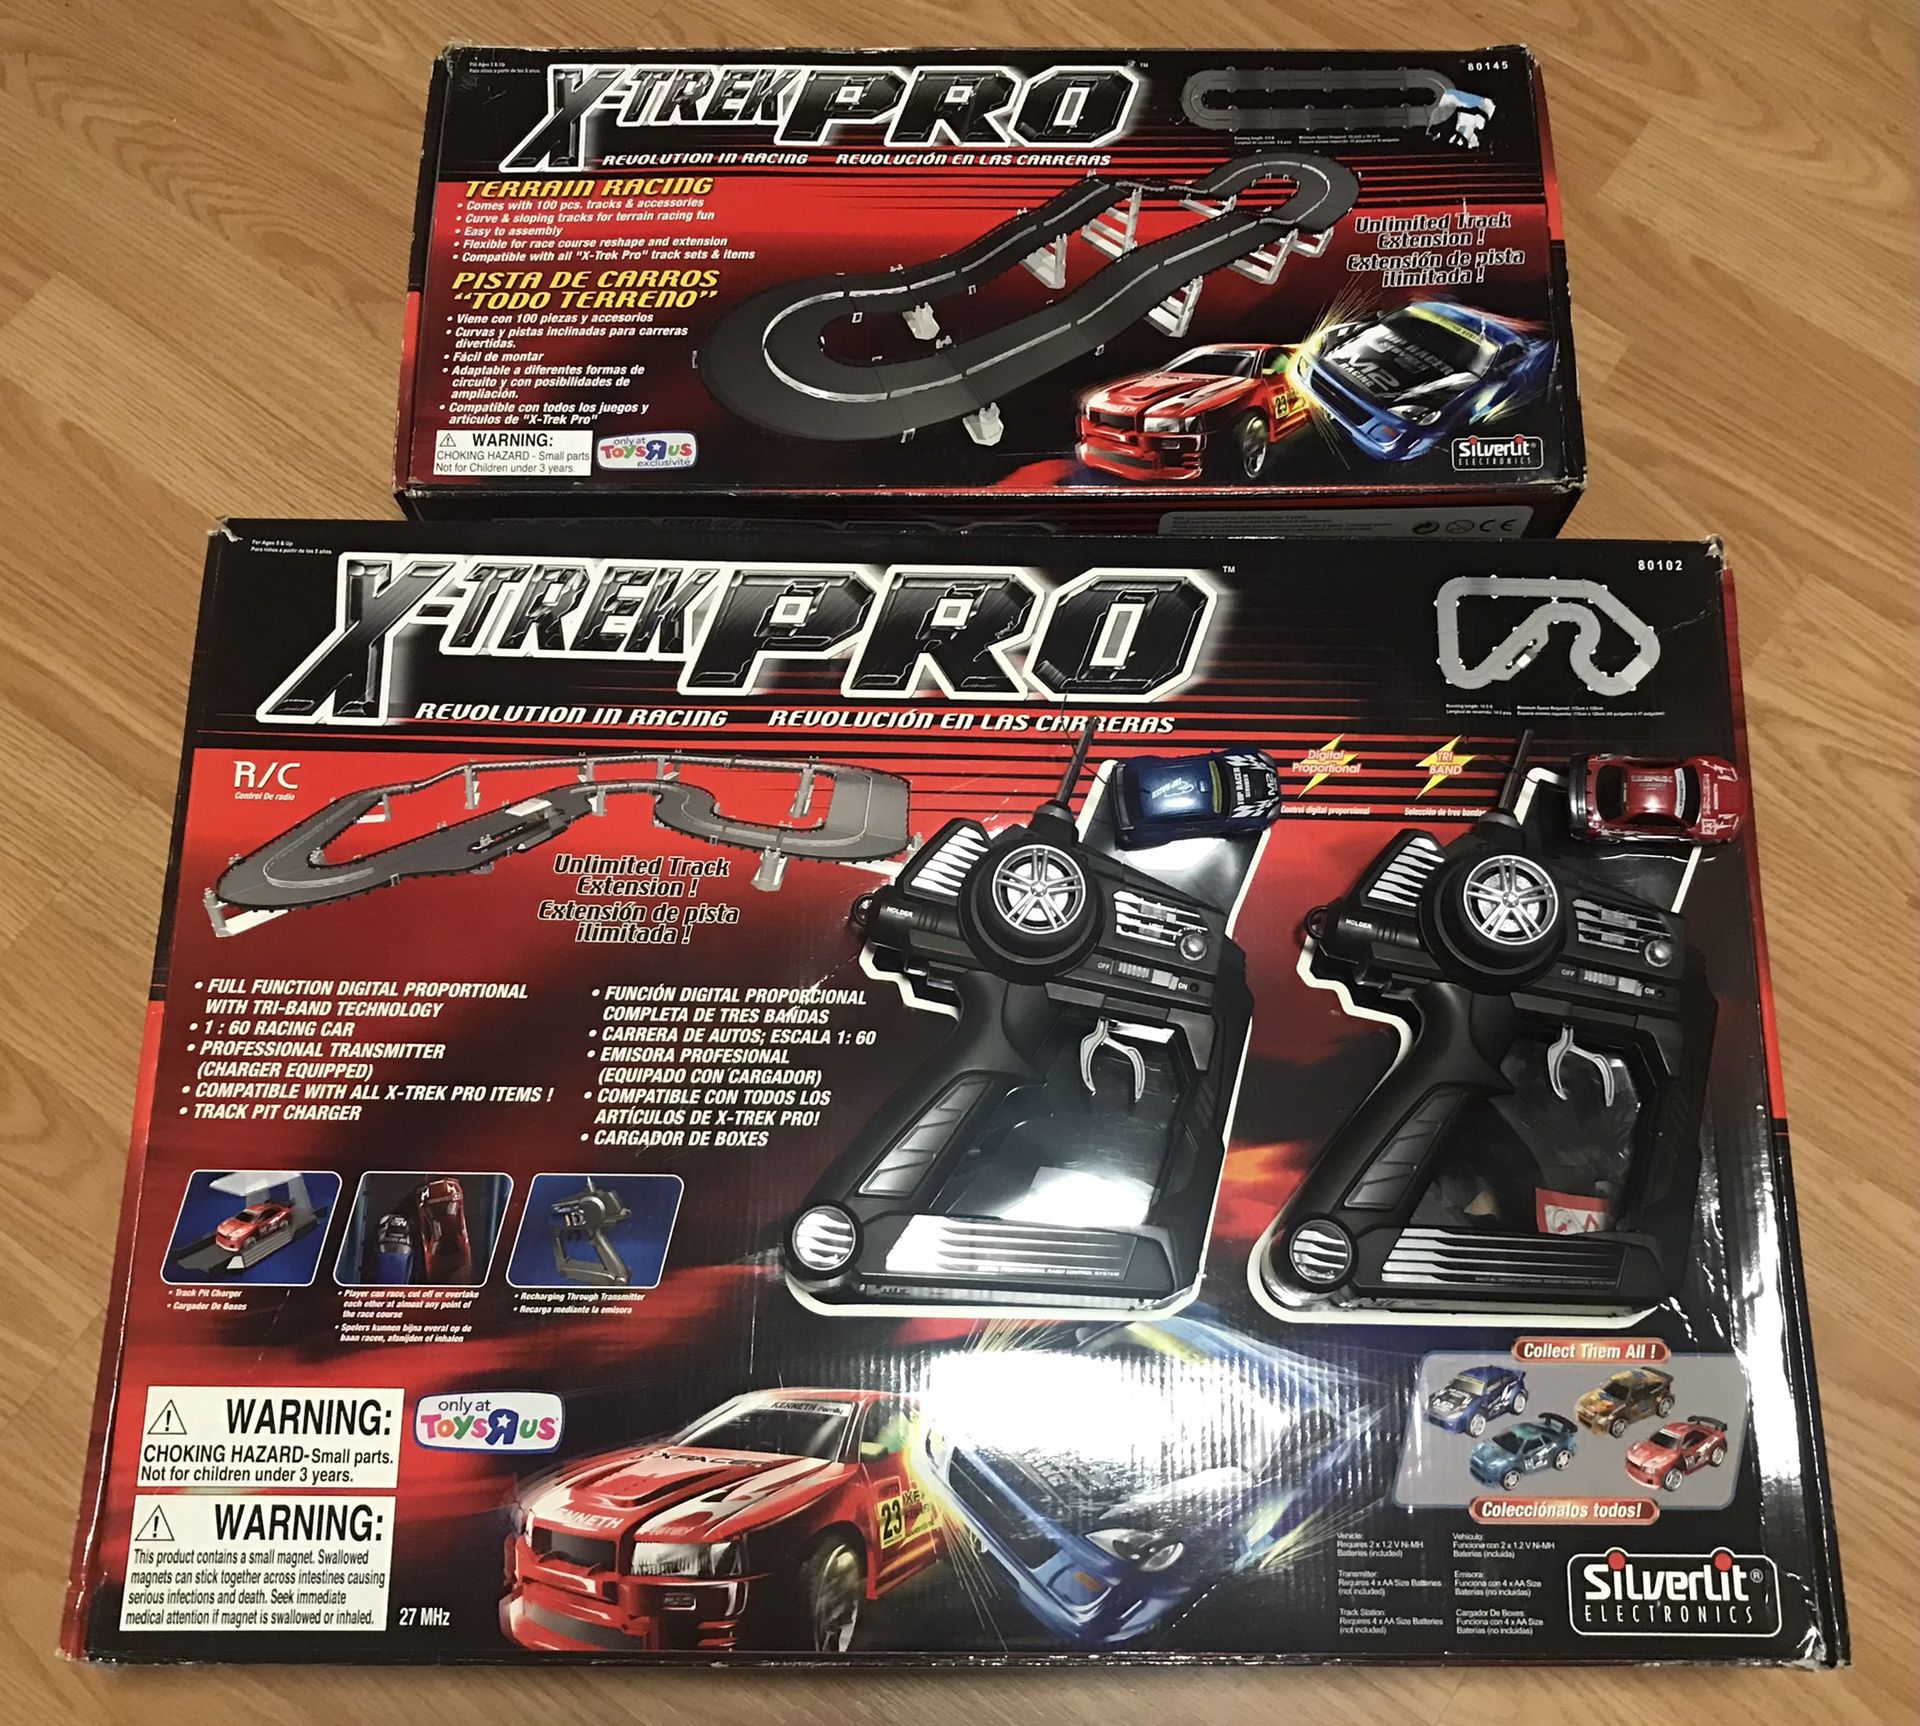 X-Trek Pro Rc tracks and cars - working